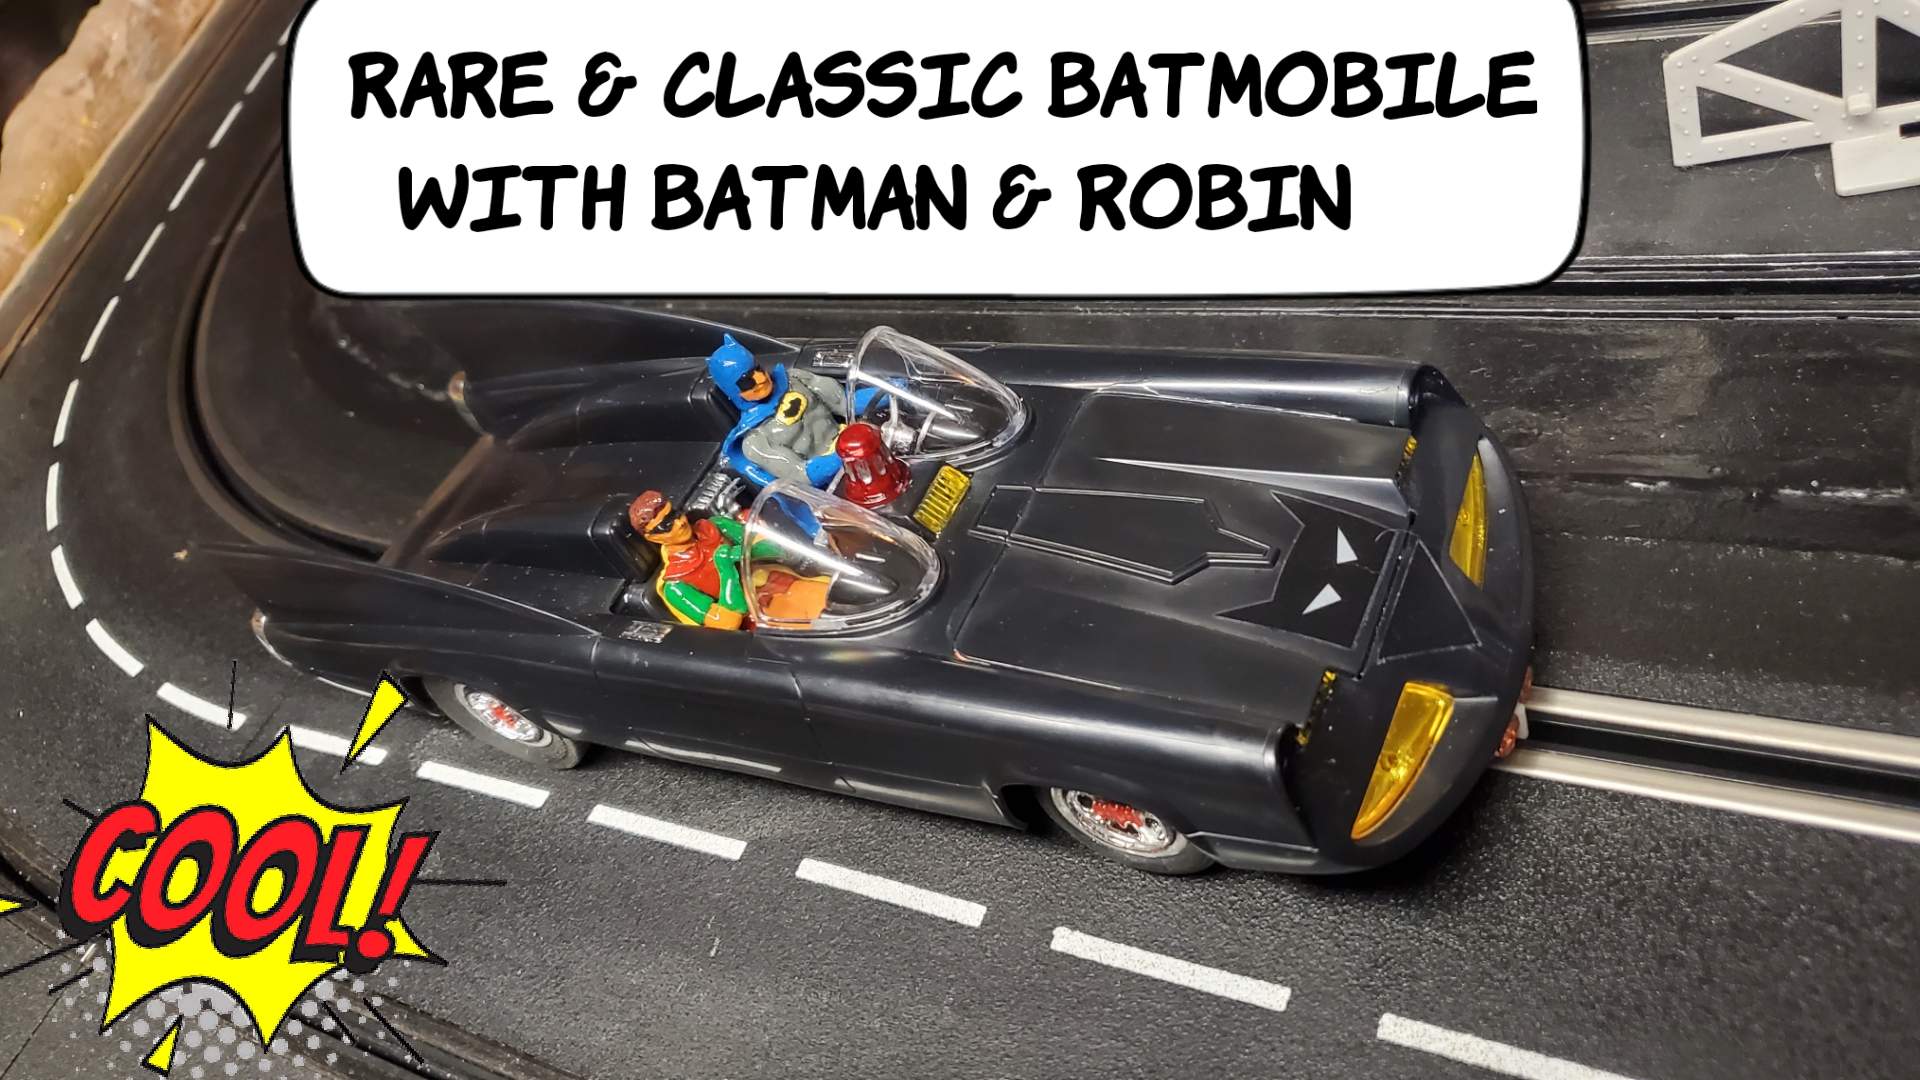 * Black Friday Super Sale, Save $150 vs. our Ebay $650 Store Price * Batman Batmobile Very Rare 1960’s Limited Edition with Batman & Robin Slot Car 1:24 Scale